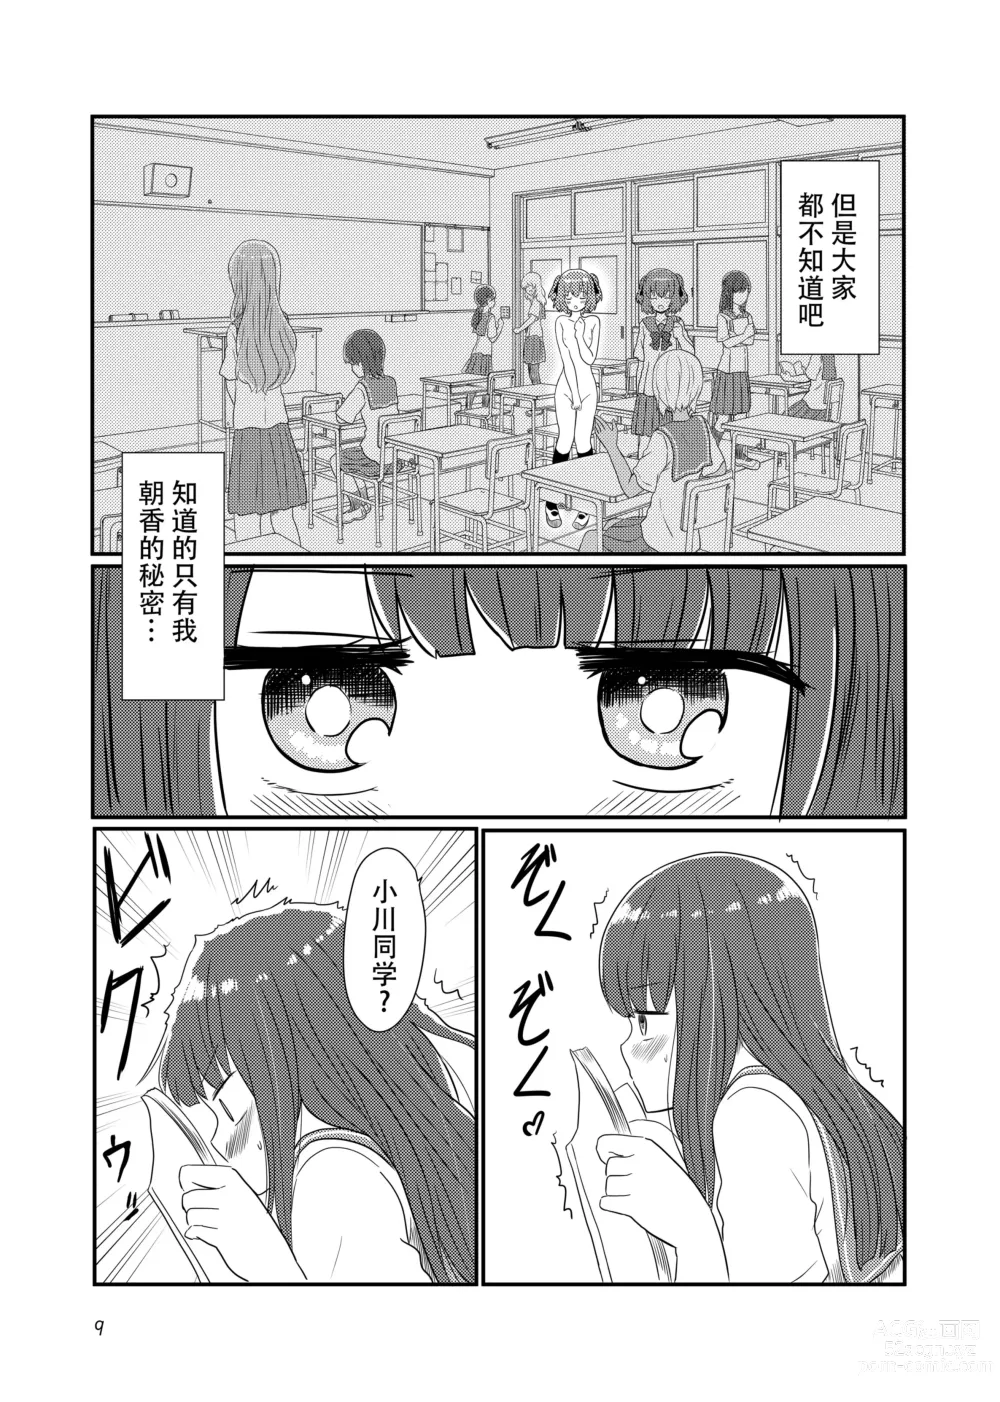 Page 7 of manga Roshutsu Play suru Yuripple